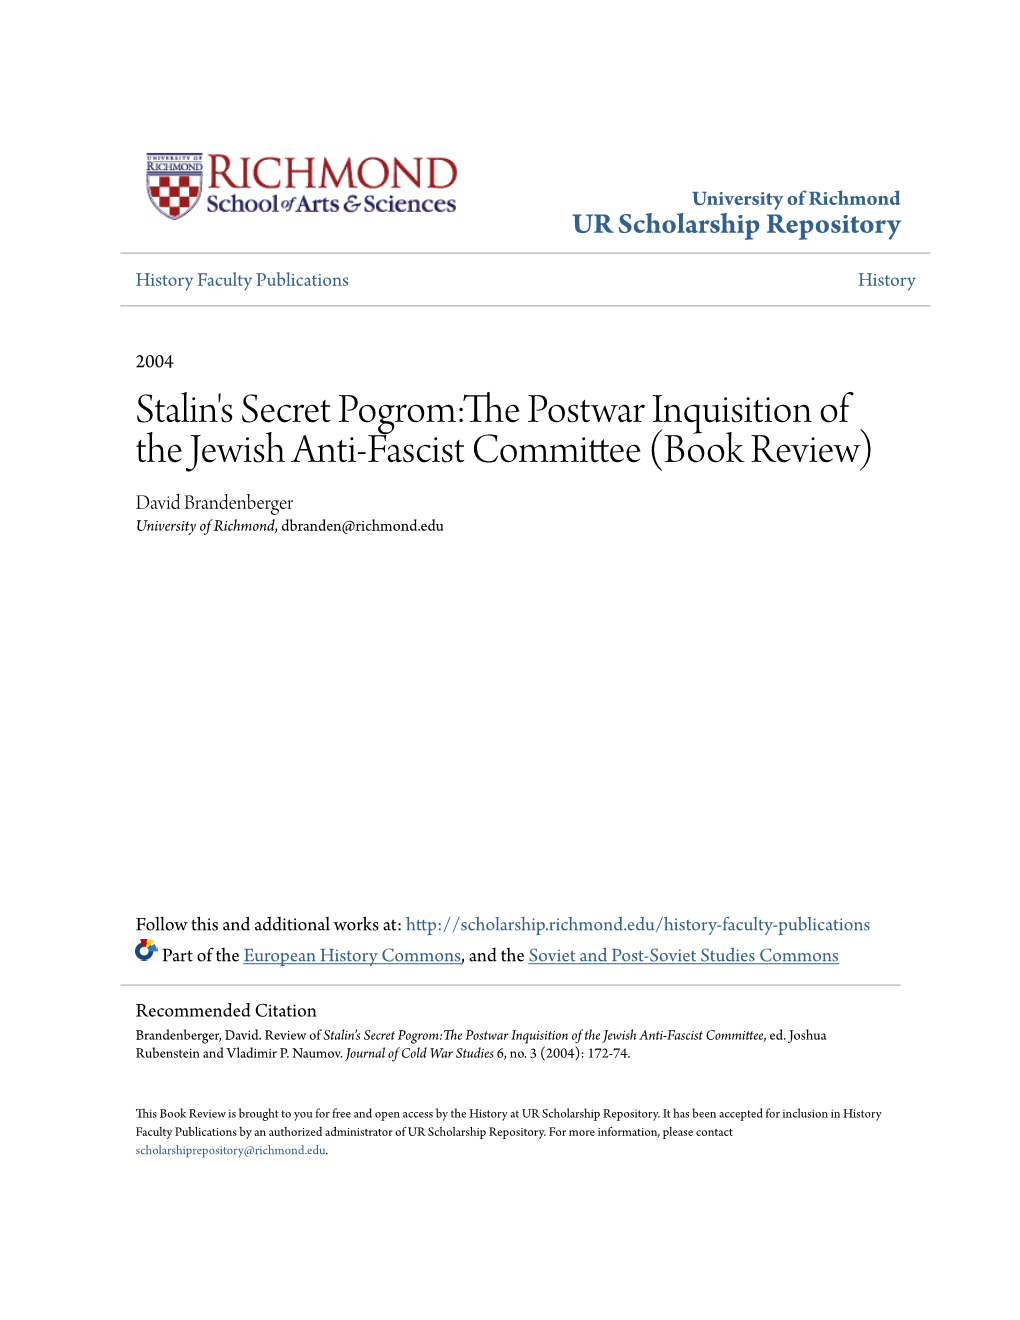 Stalin's Secret Pogrom:The Postwar Inquisition of the Jewish Anti-Fascist Committee, Ed